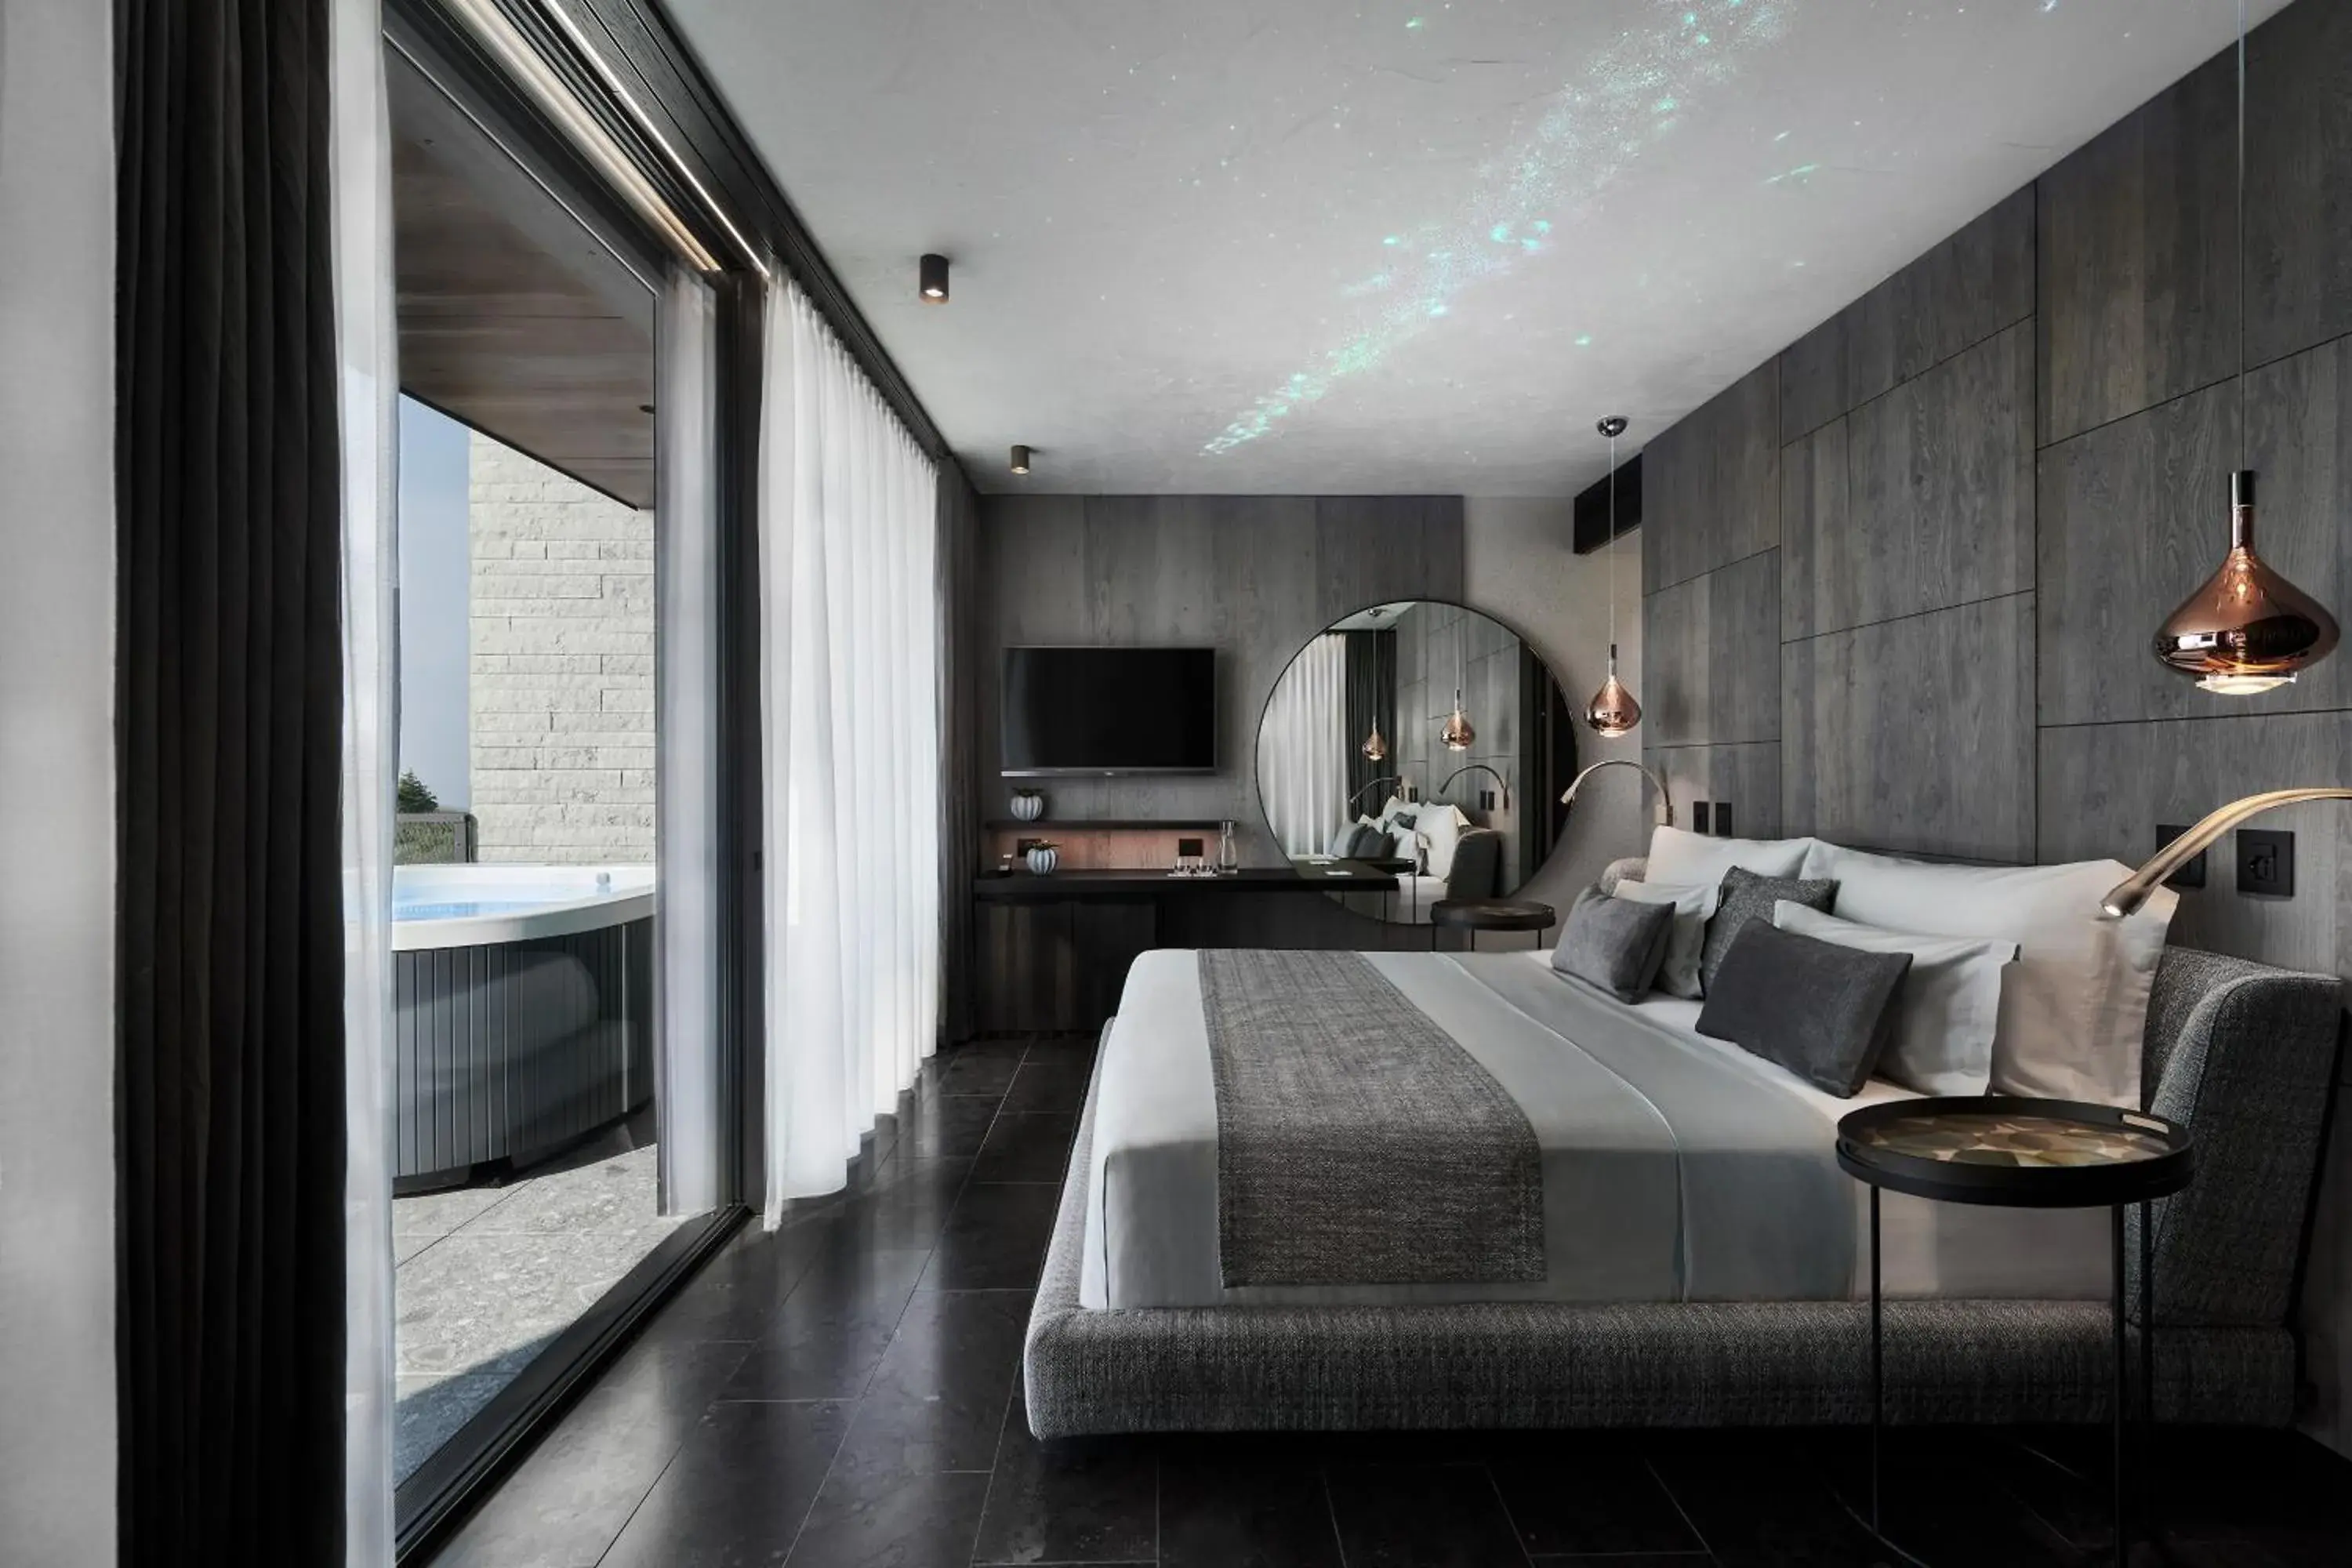 Bed in Quellenhof Luxury Resort Lazise